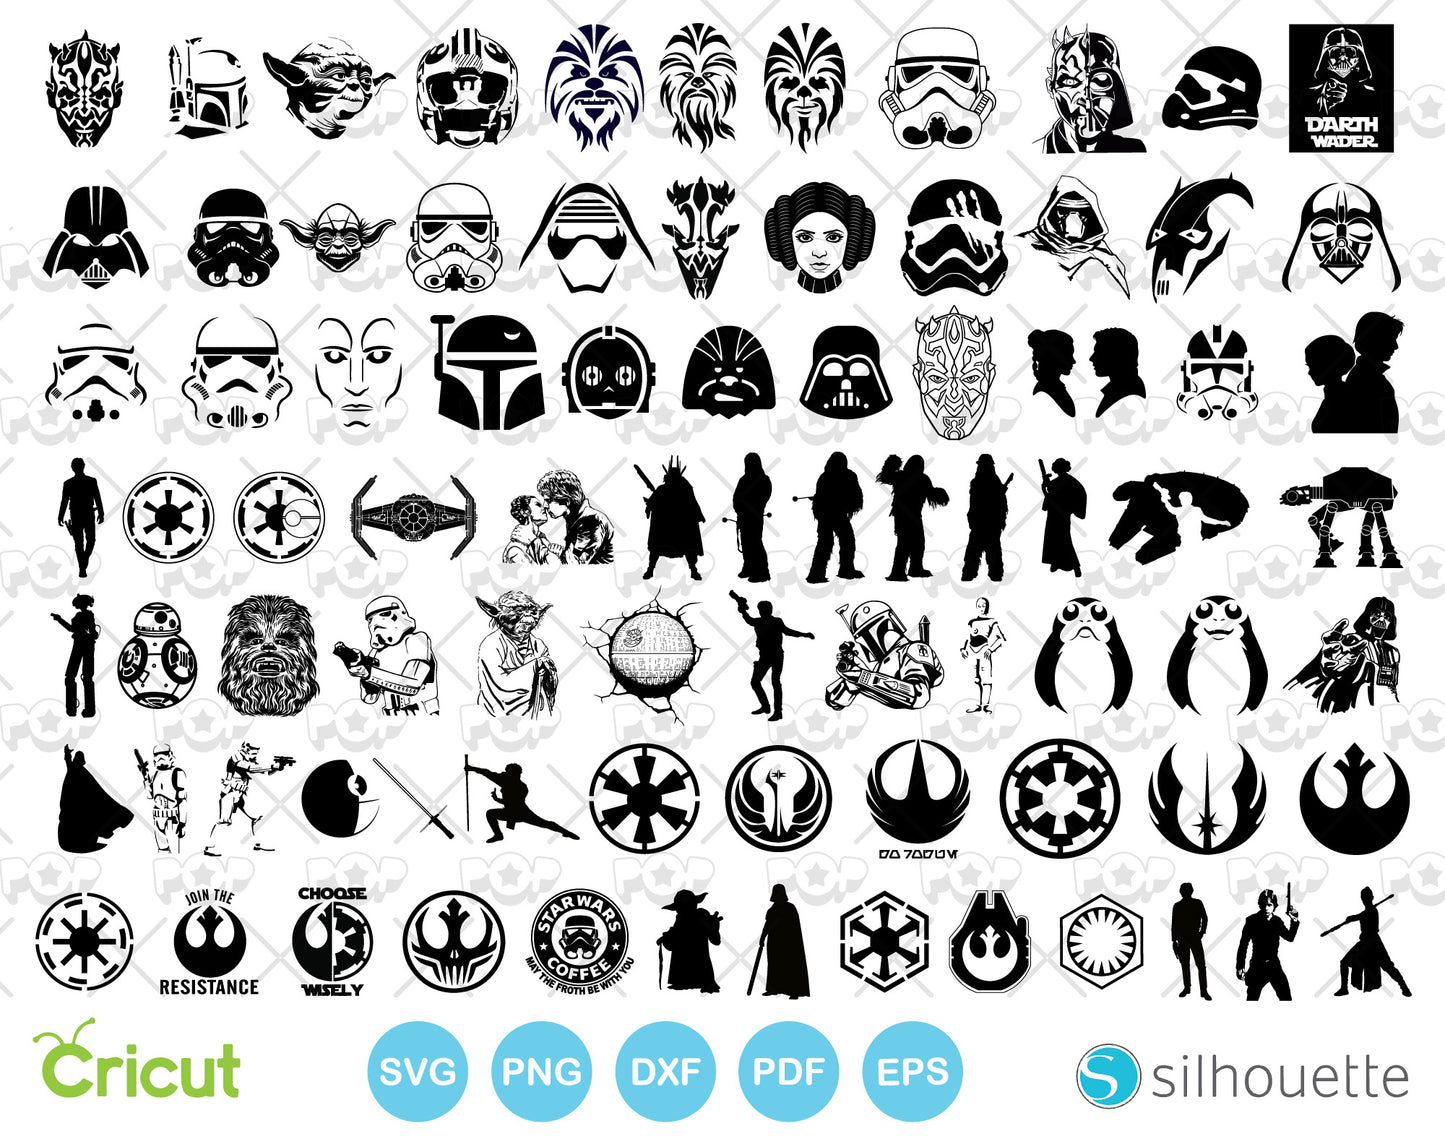 Star Wars mega clipart bundle, SVG cut files for Cricut / Silhouette, Star Wars designs for sublimation, instant download